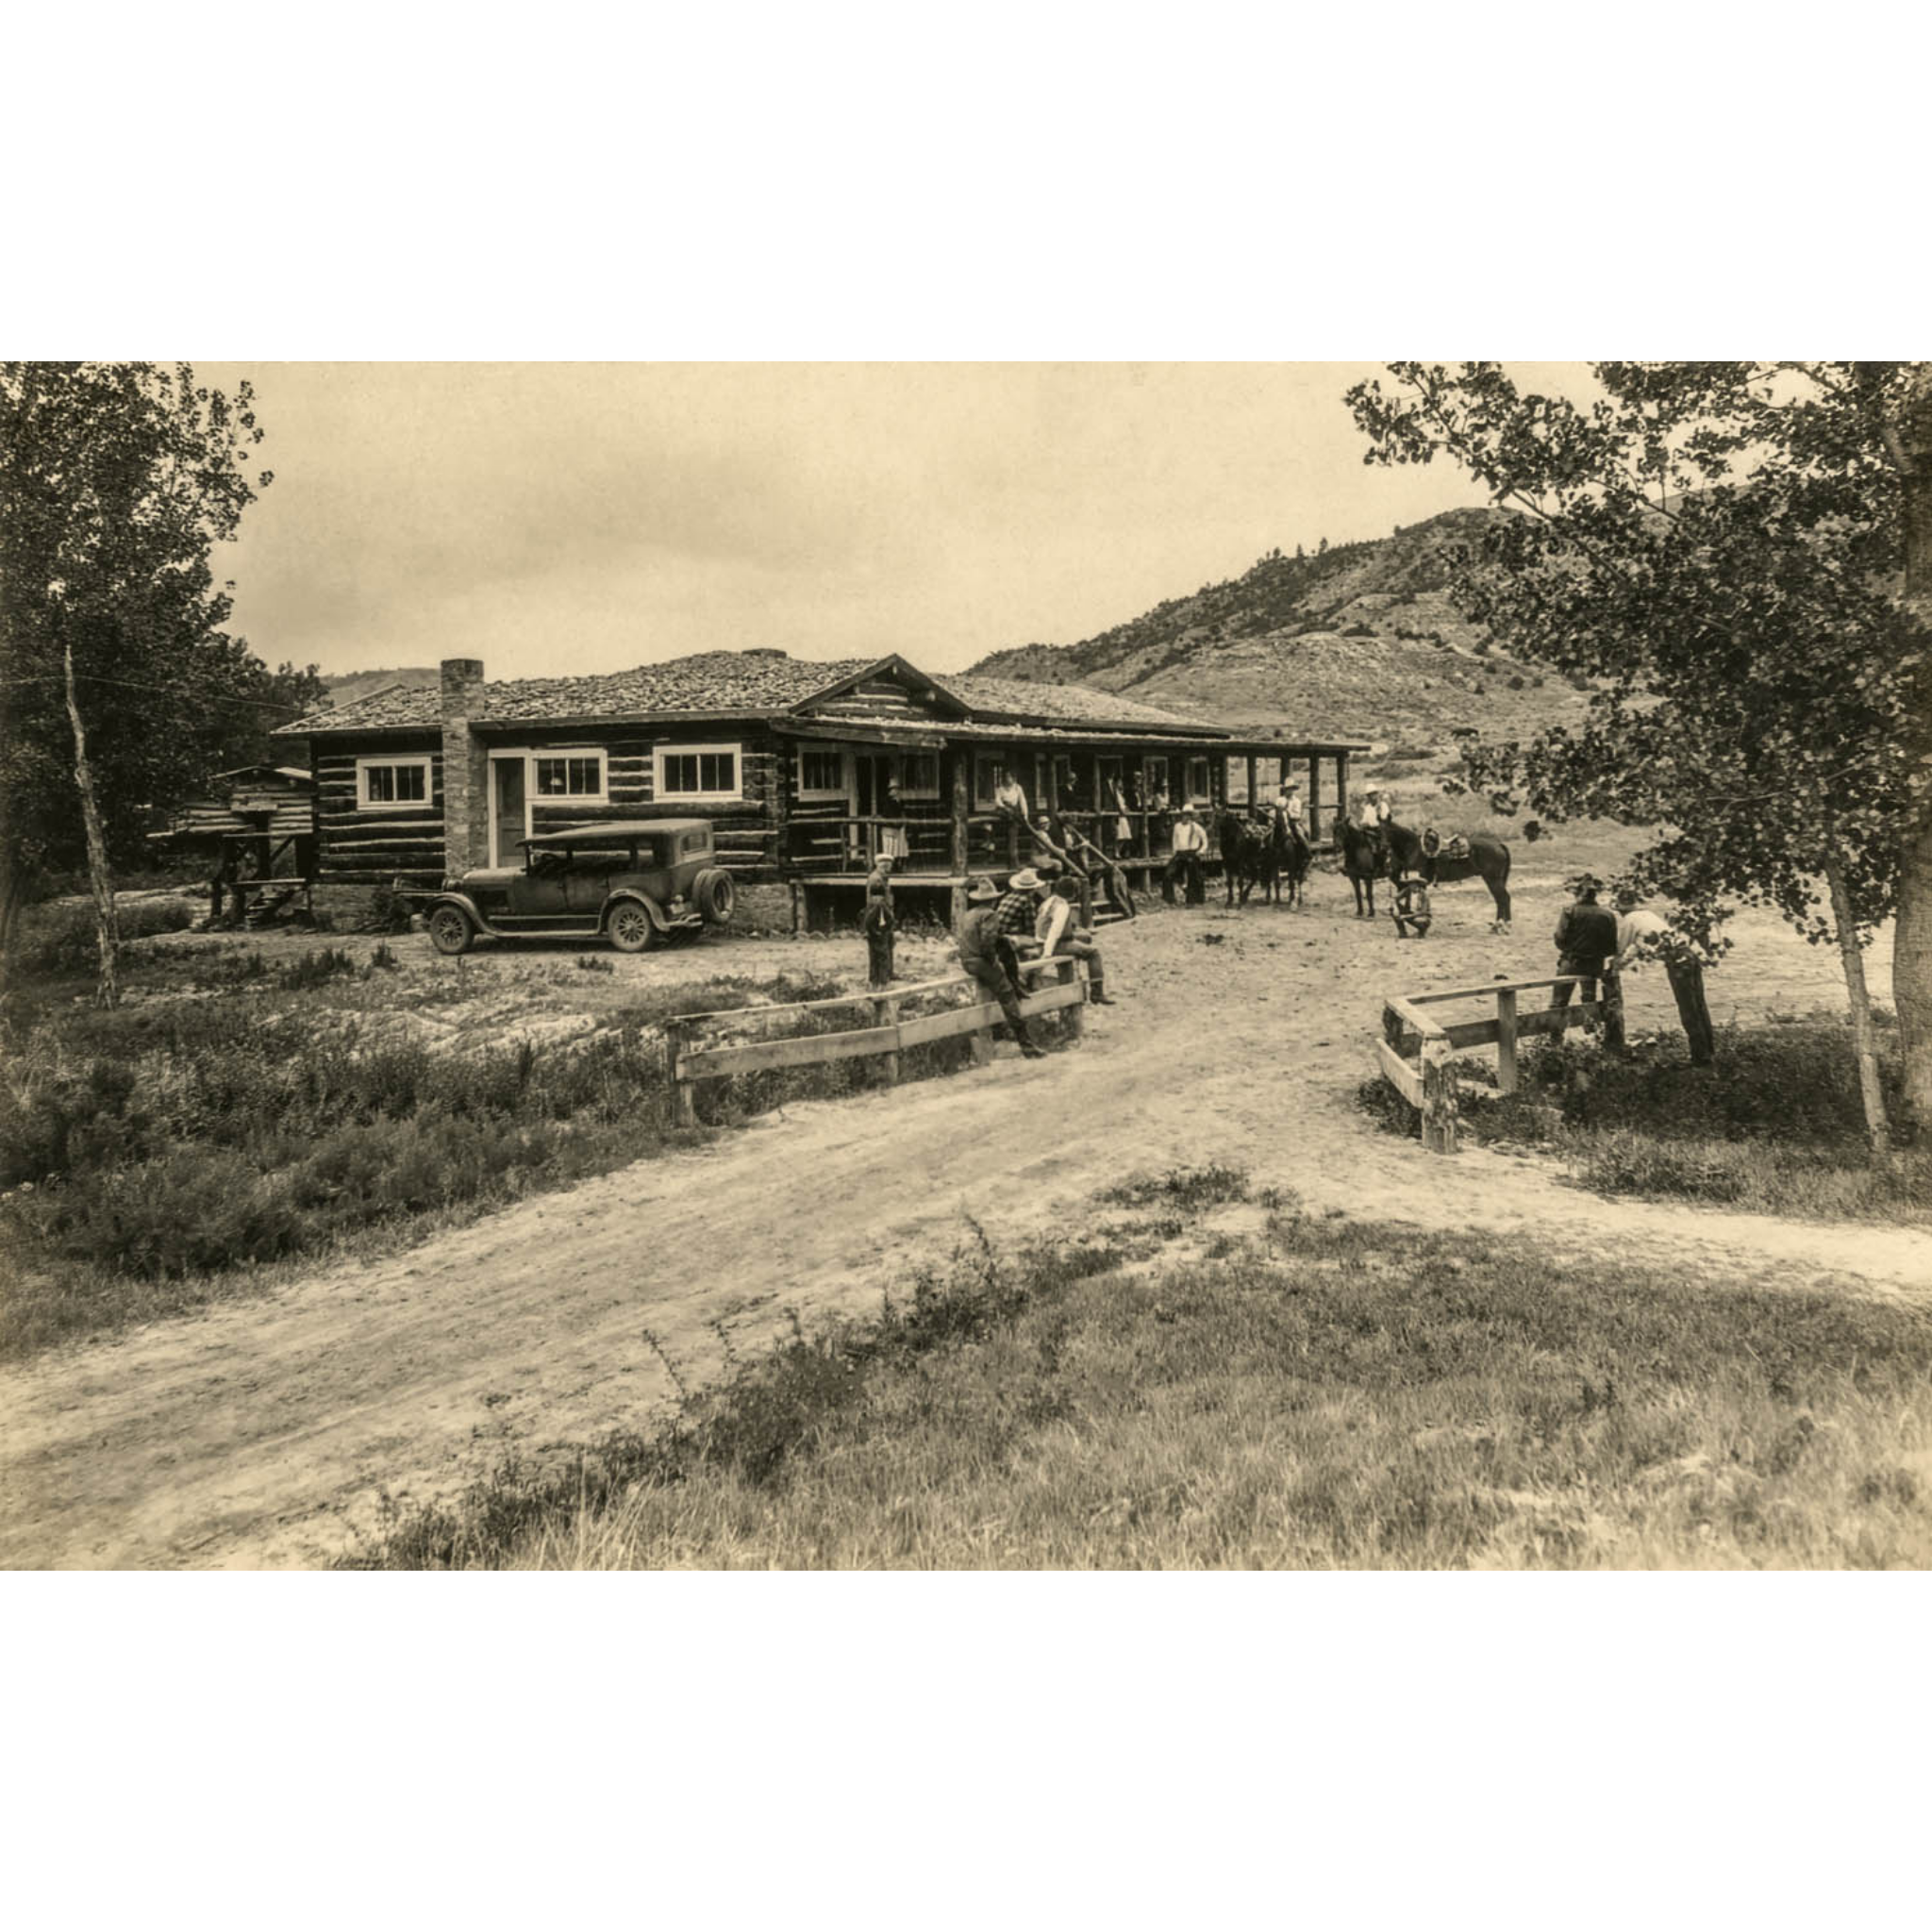 Bones Ranch: Ranch House - ca. 1930 Photograph